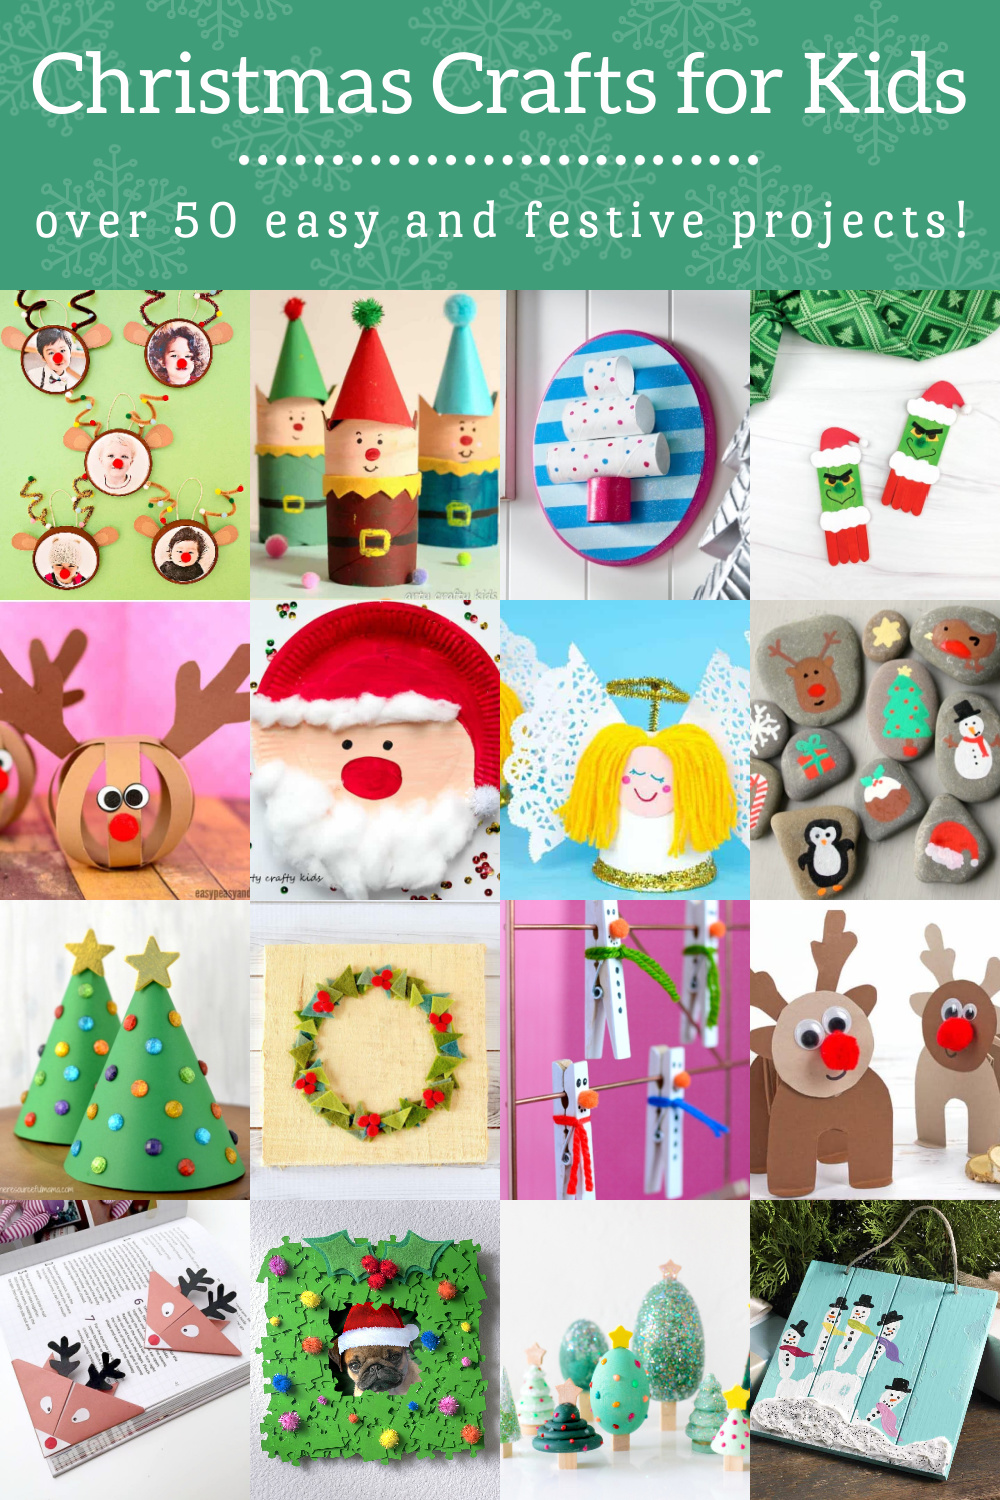 33 Simple, Fun Kids Christmas Crafts